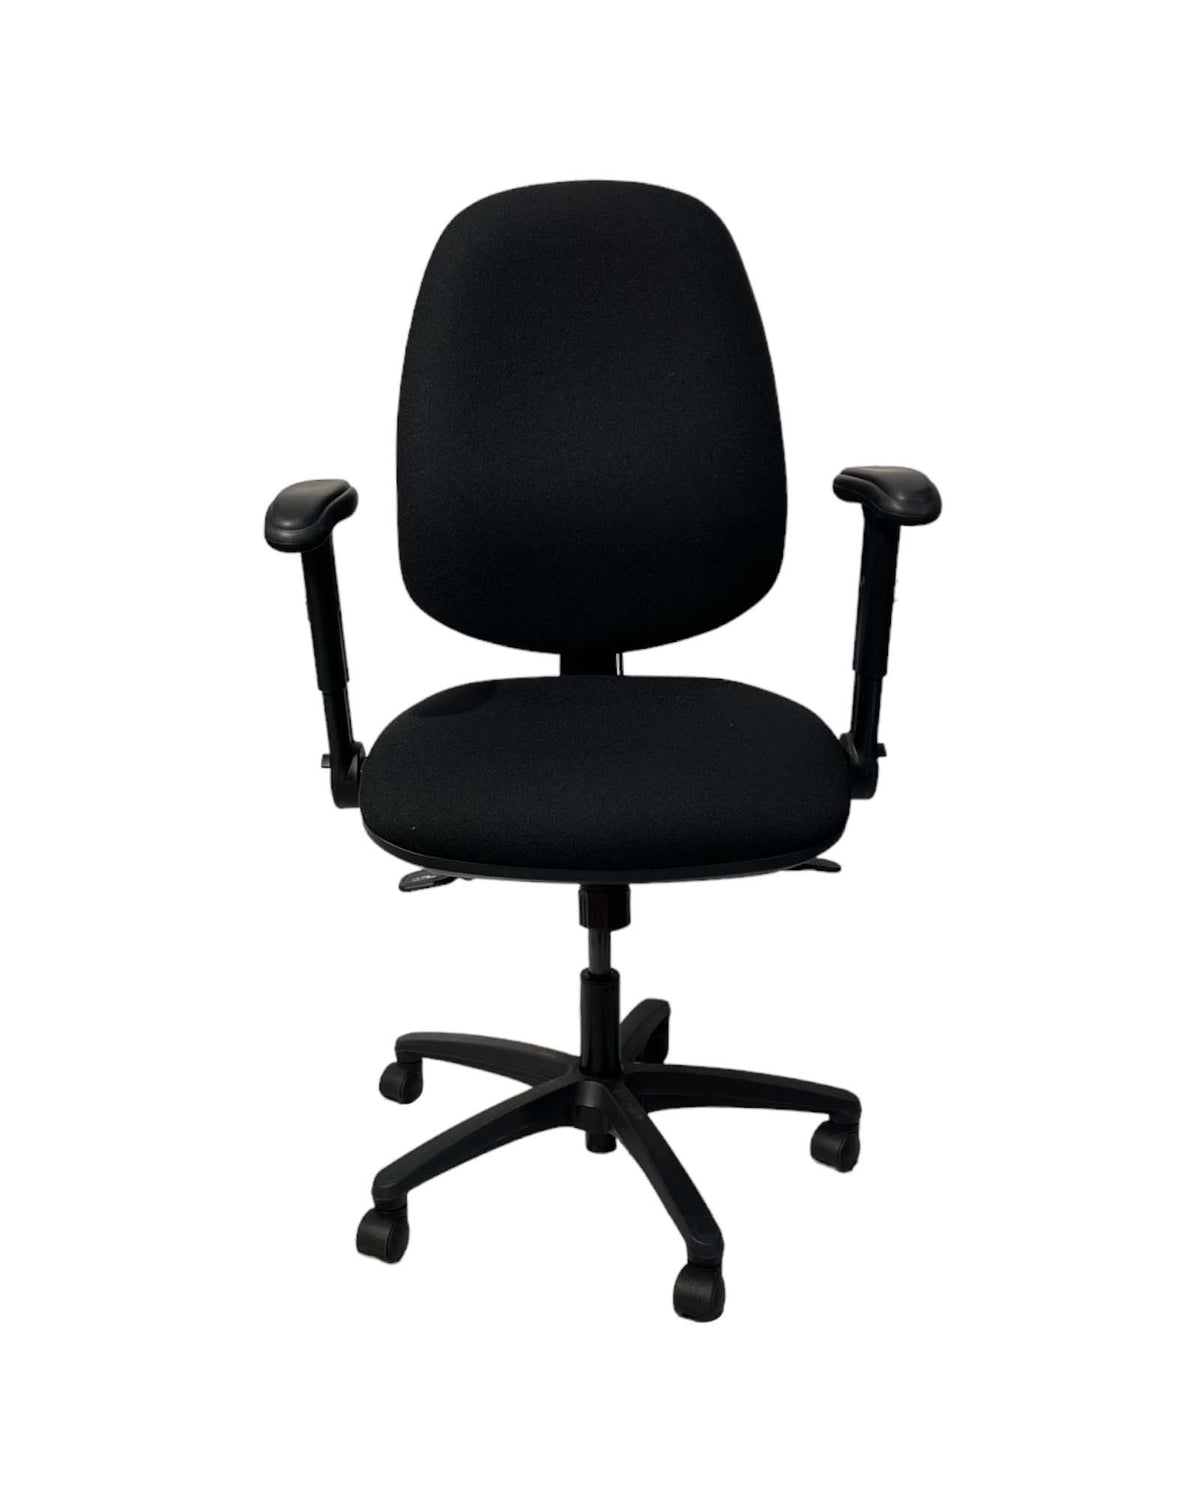 Kinetic 2 Upholstered Operator Chair